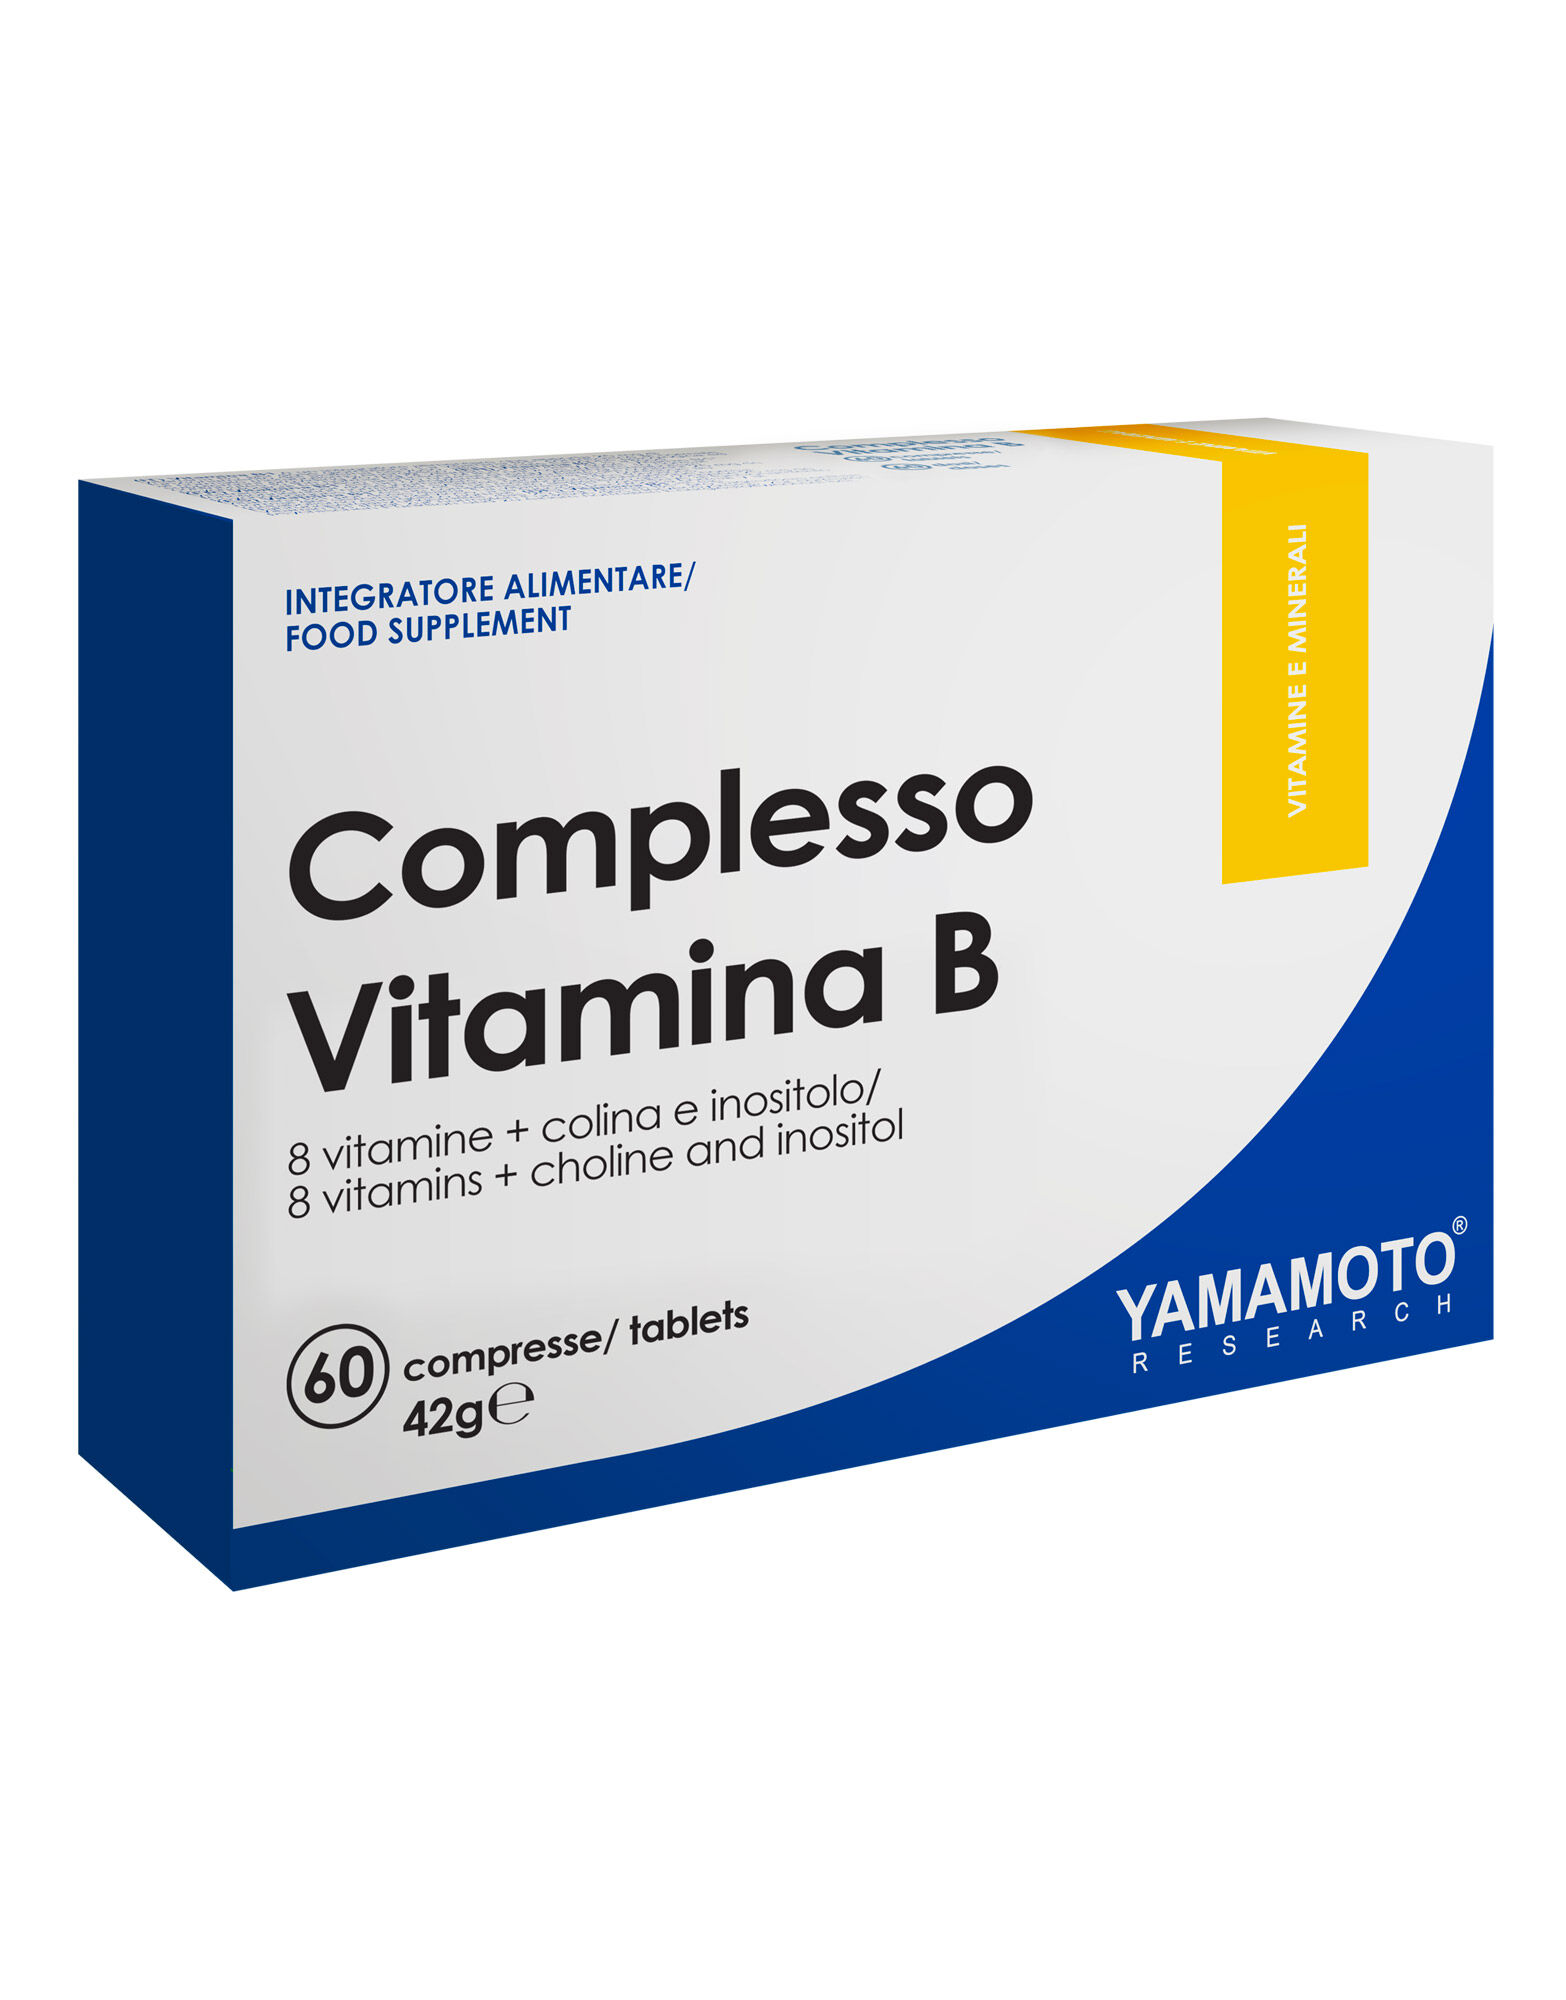 yamamoto research complesso vitamina b 60 compresse